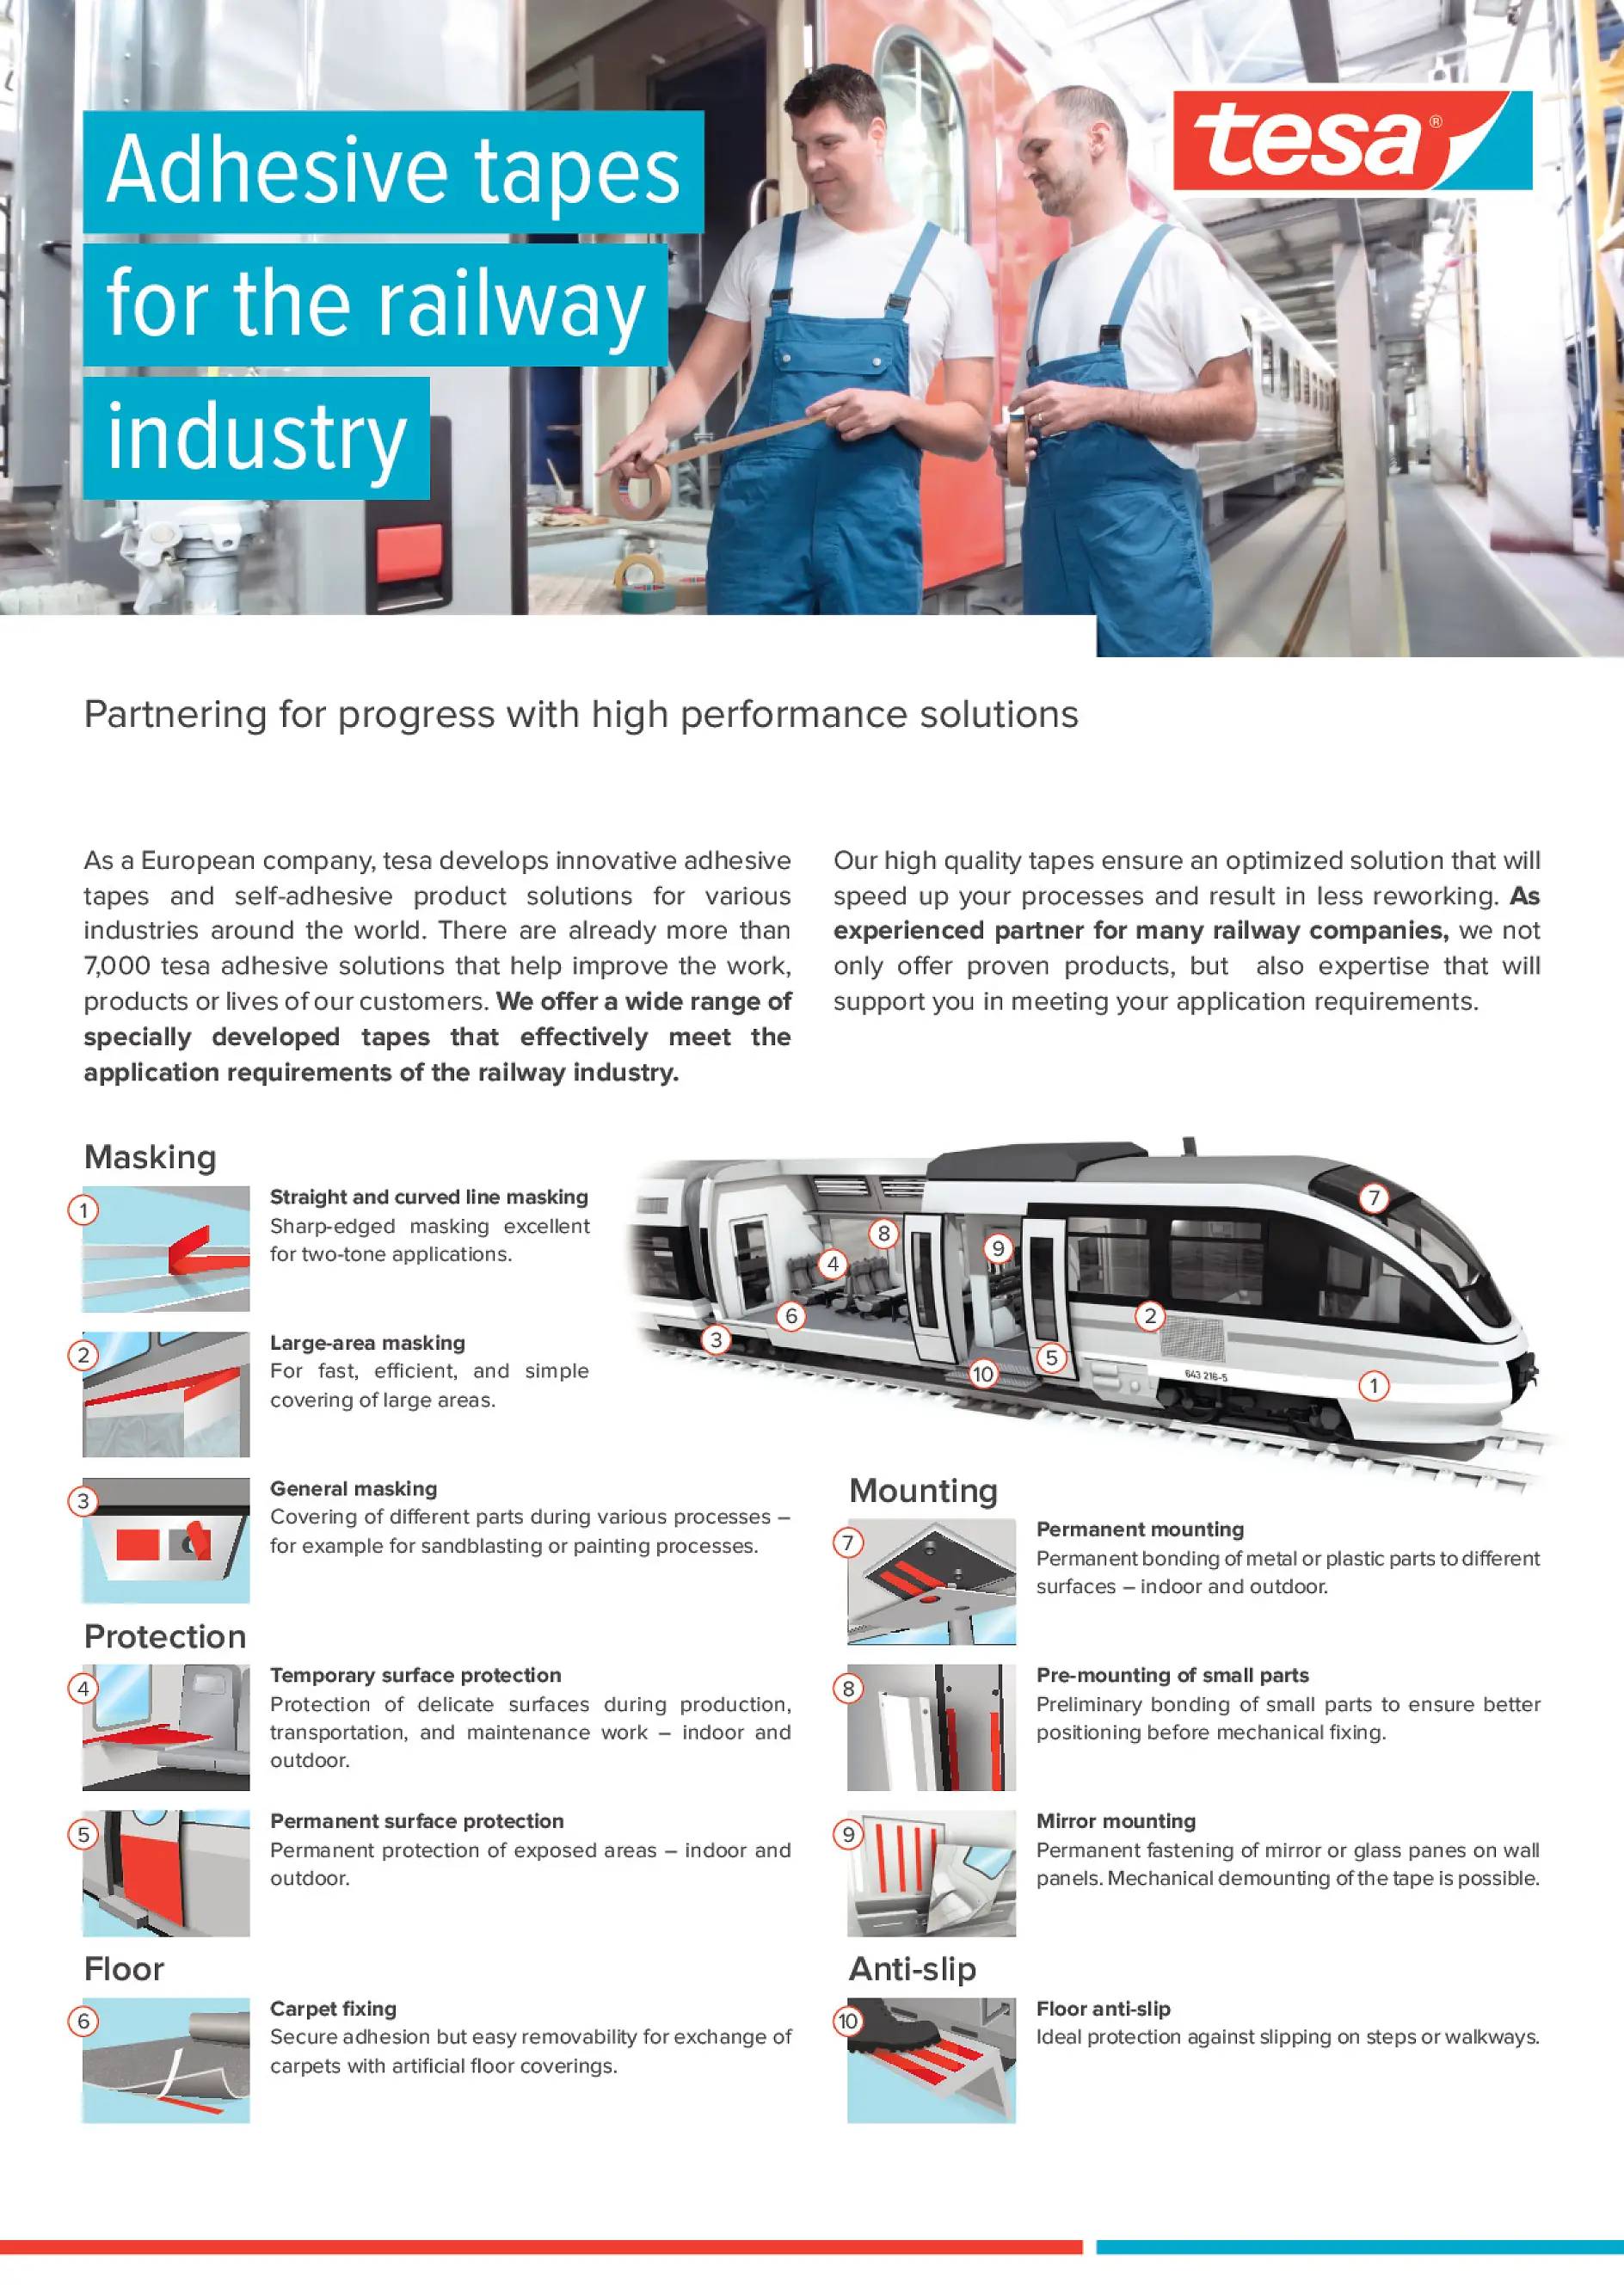 tesa-tape-solutions-for-the-railway-industry-en